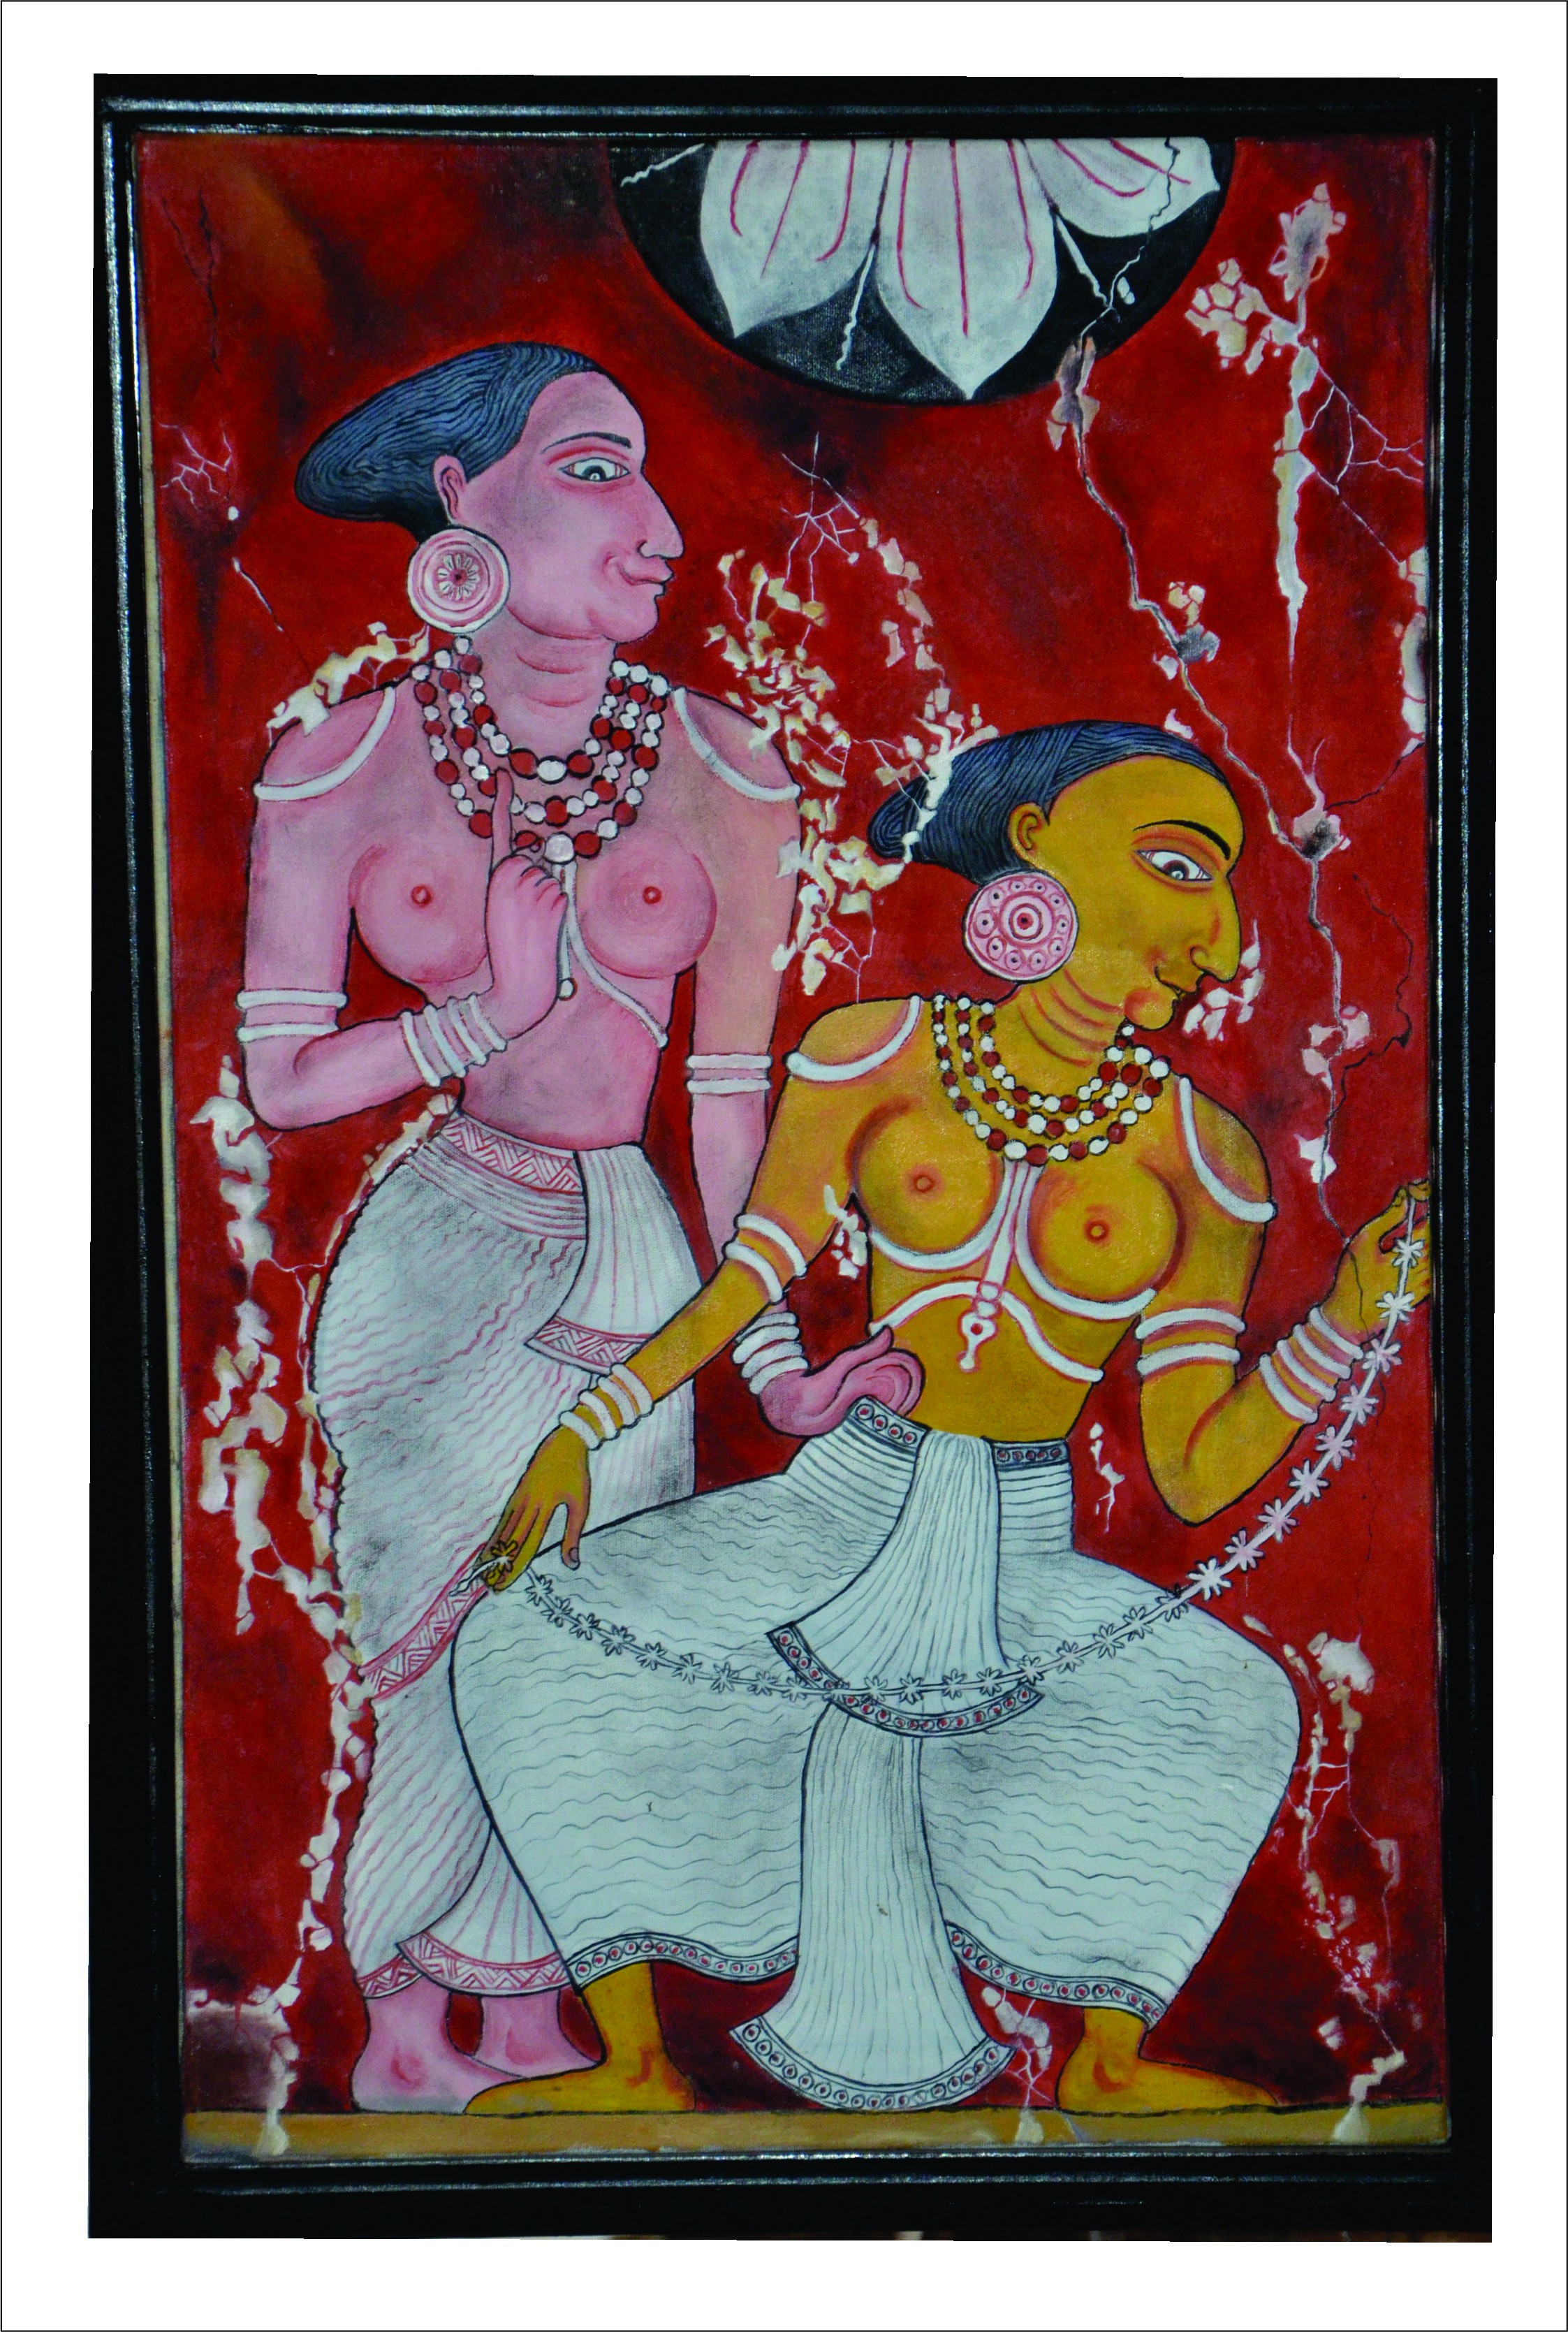 Two Daughter of Maara by Chandana Bandara Samarakoon